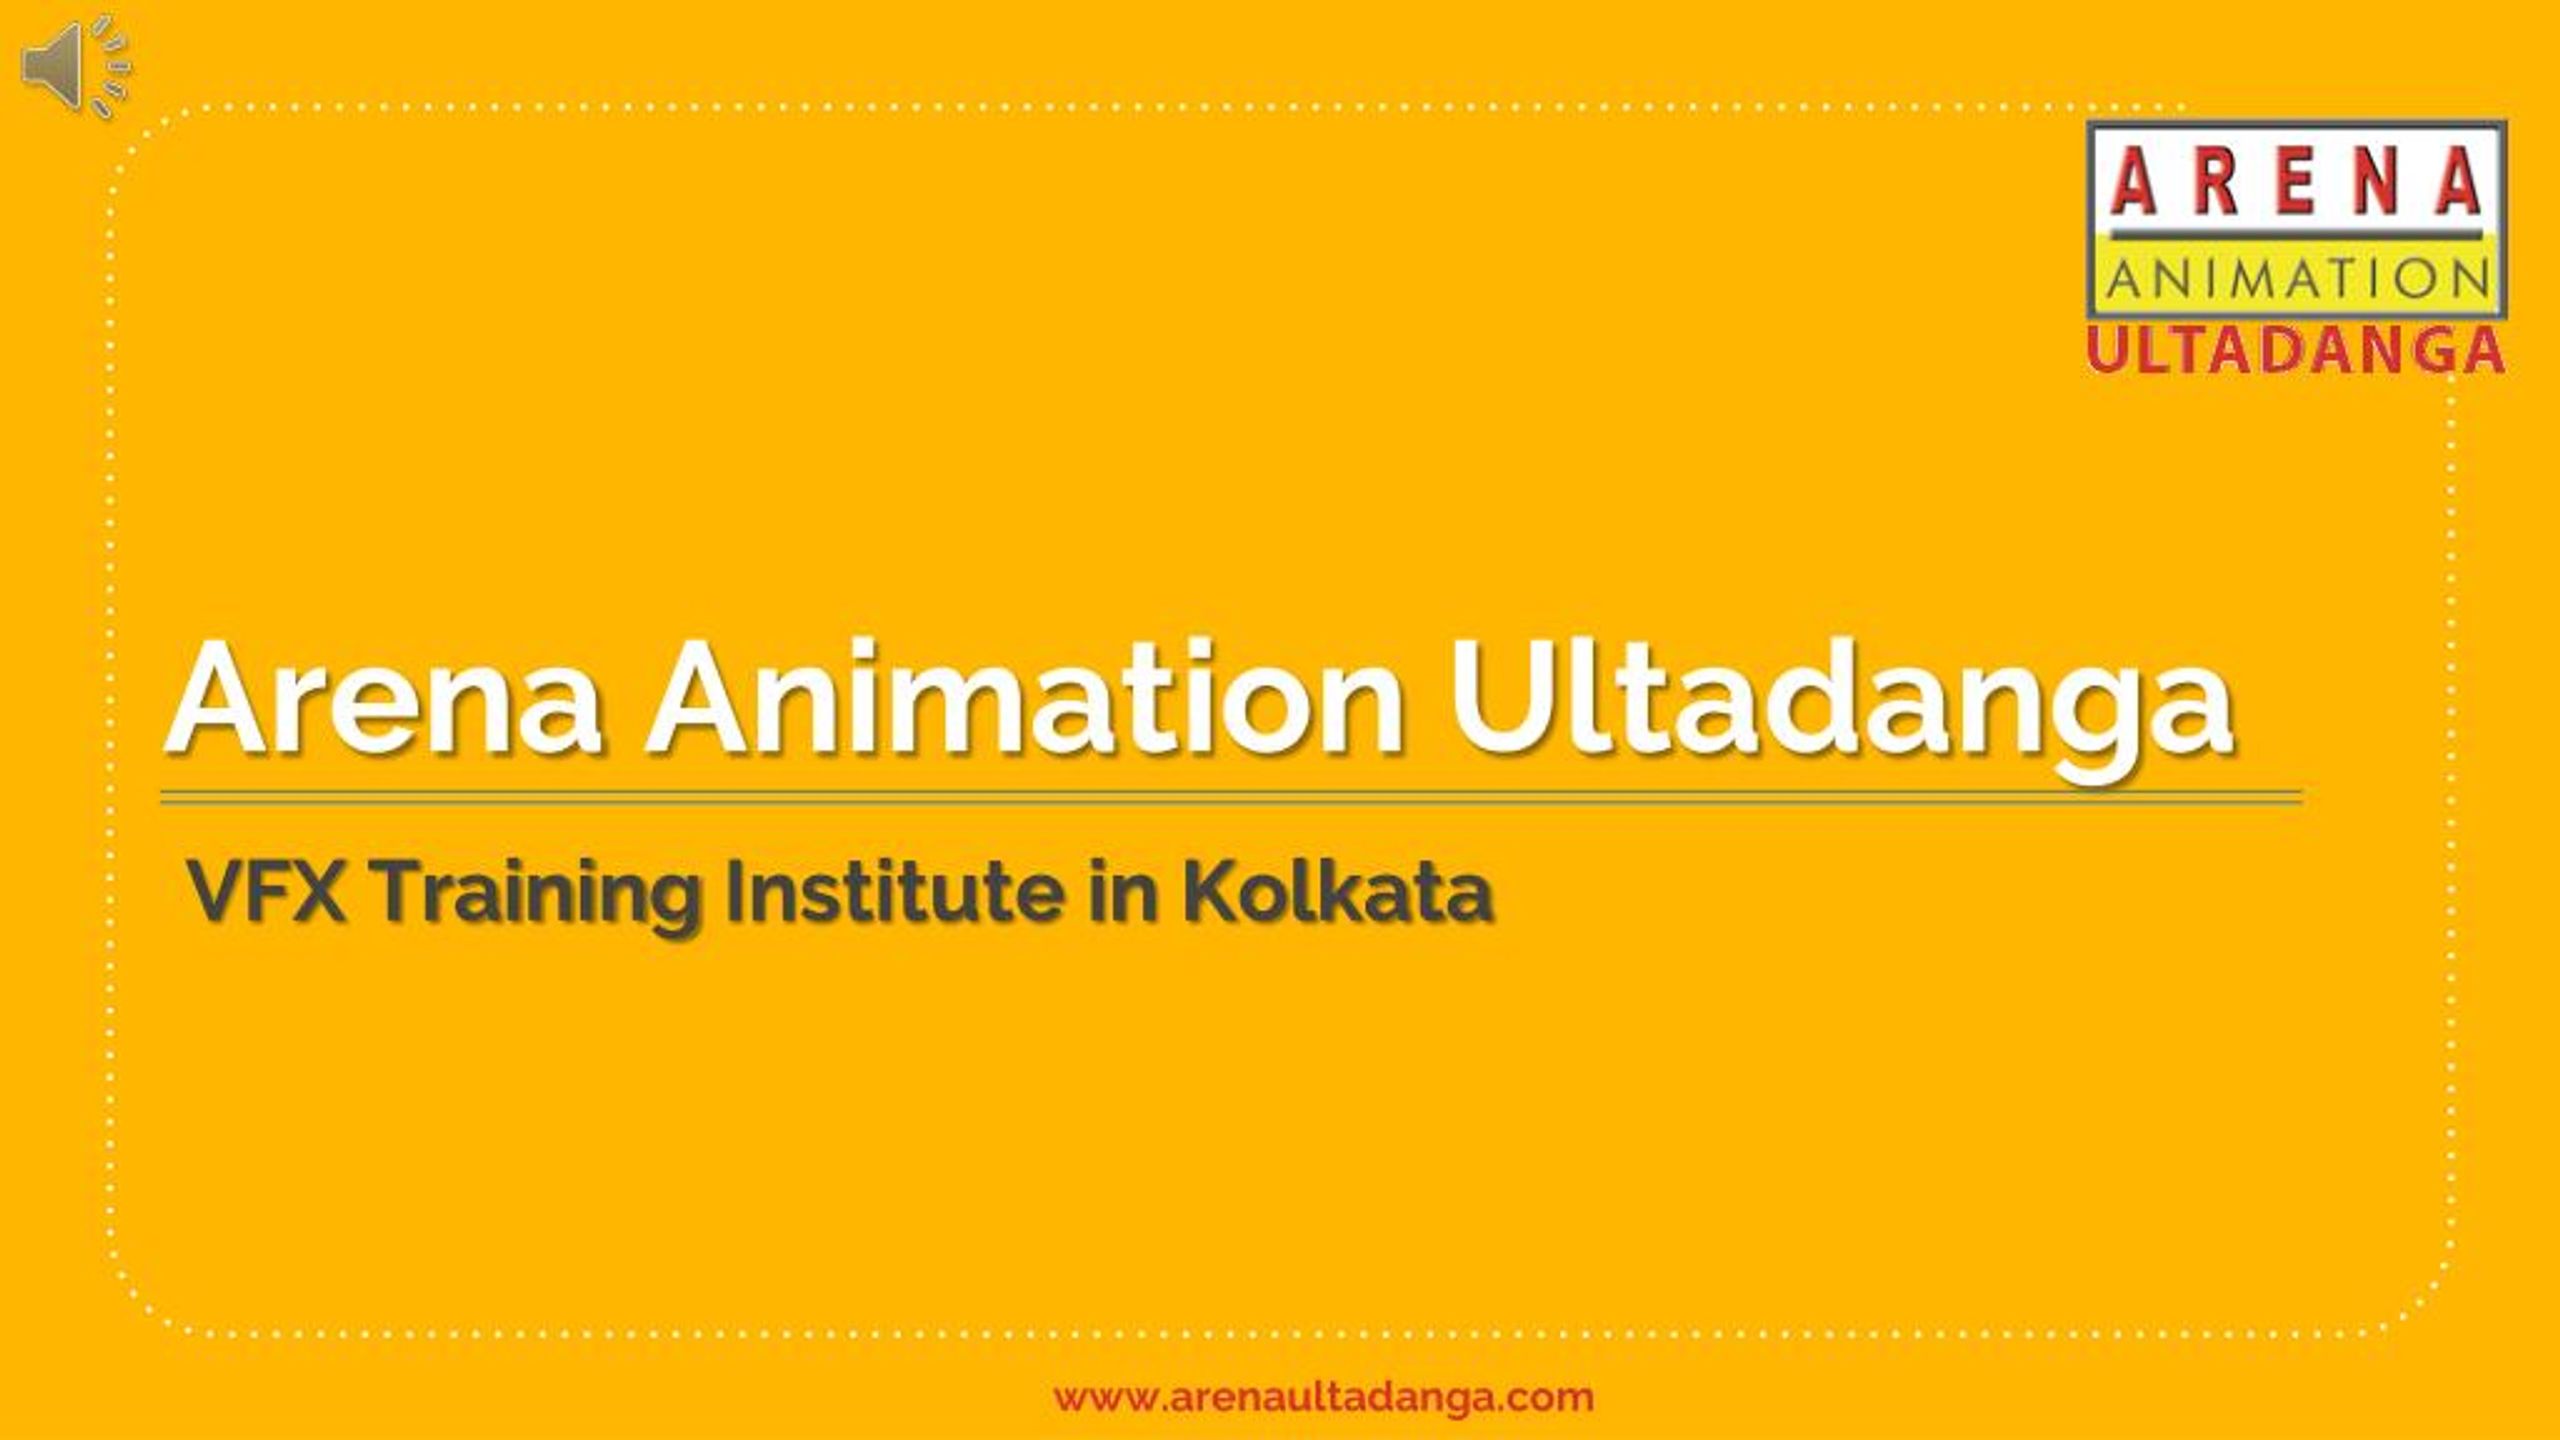 PPT - VFX Training Institute in Kolkata - Arena Animation Ultadanga  PowerPoint Presentation - ID:7873190